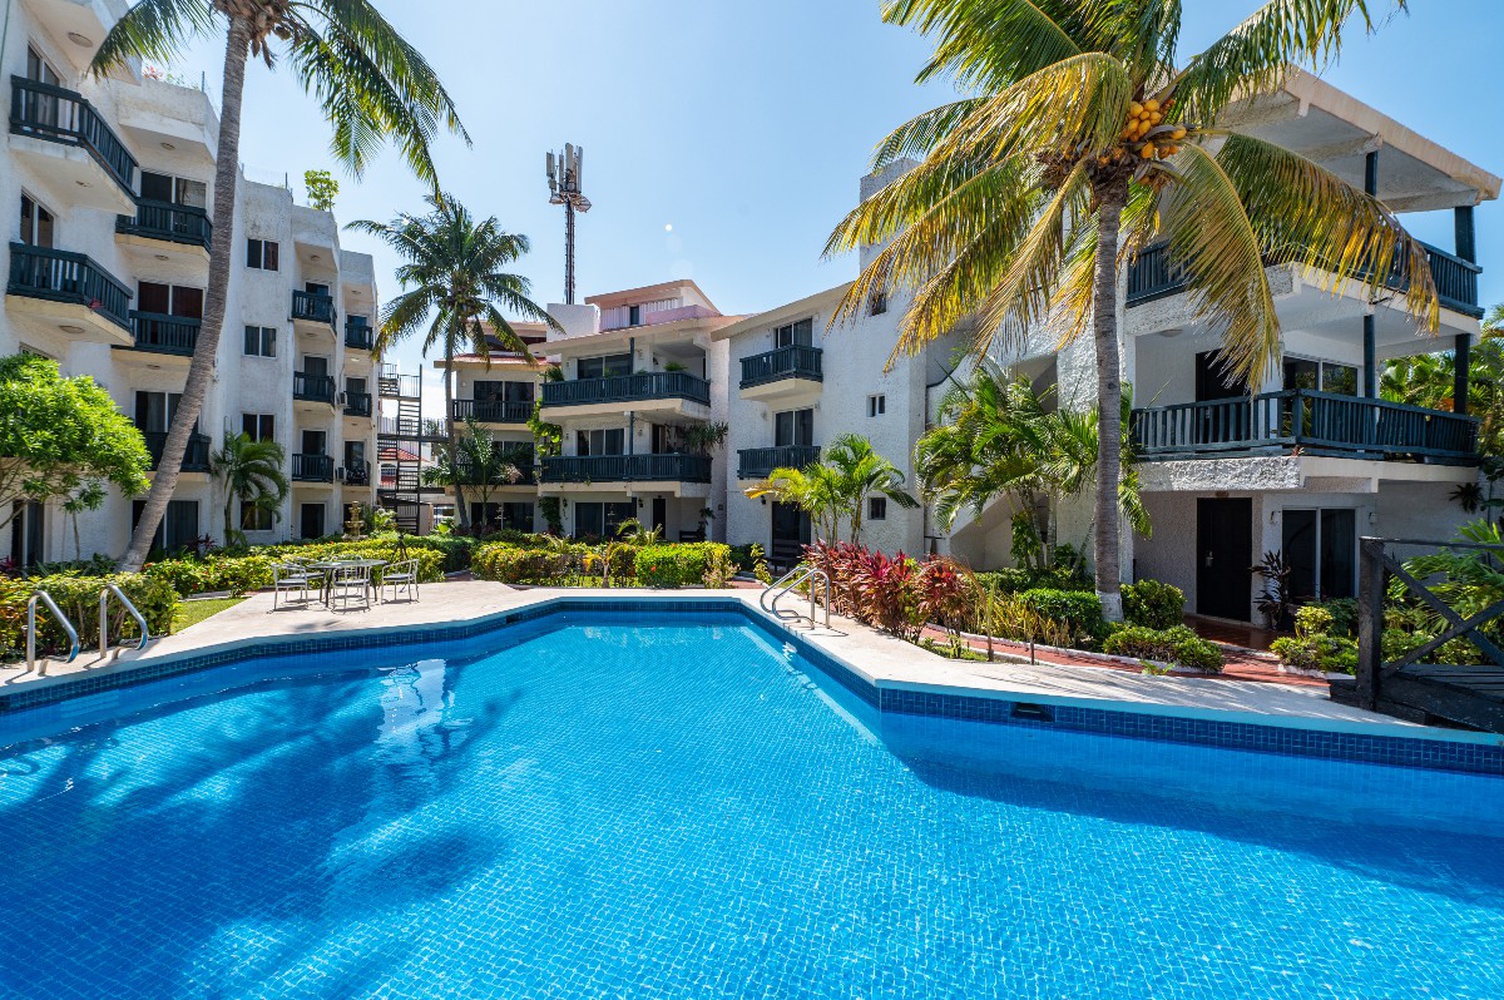 A melhor estadia na  zona hoteleira de cancun  Hotel Imperial Laguna Faranda Cancún